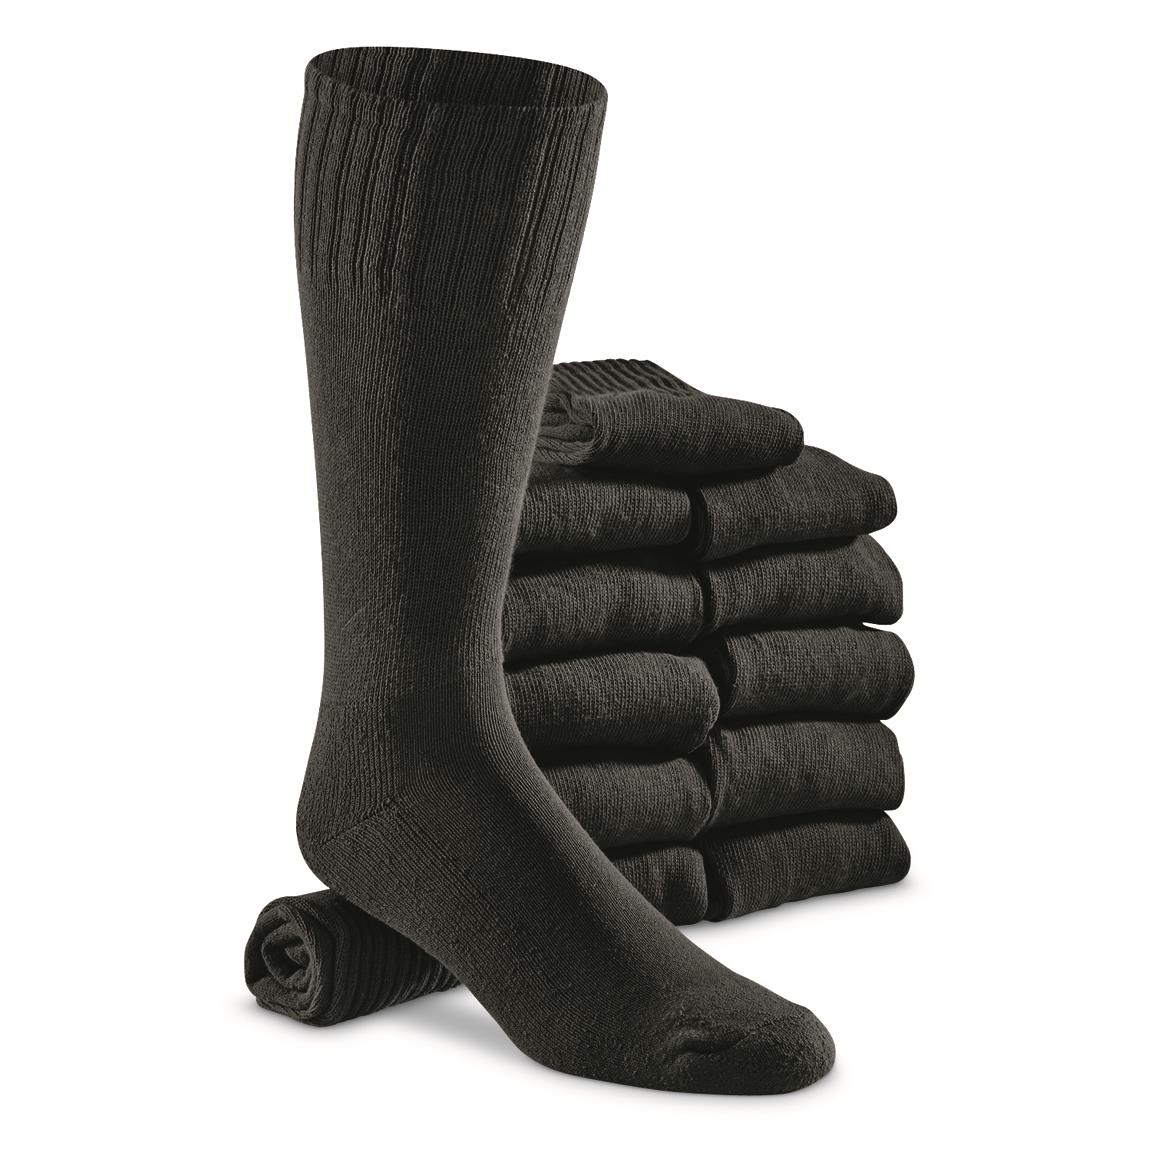 U.S. Military Surplus Heavyweight Boot Socks, 12 Pack, Black